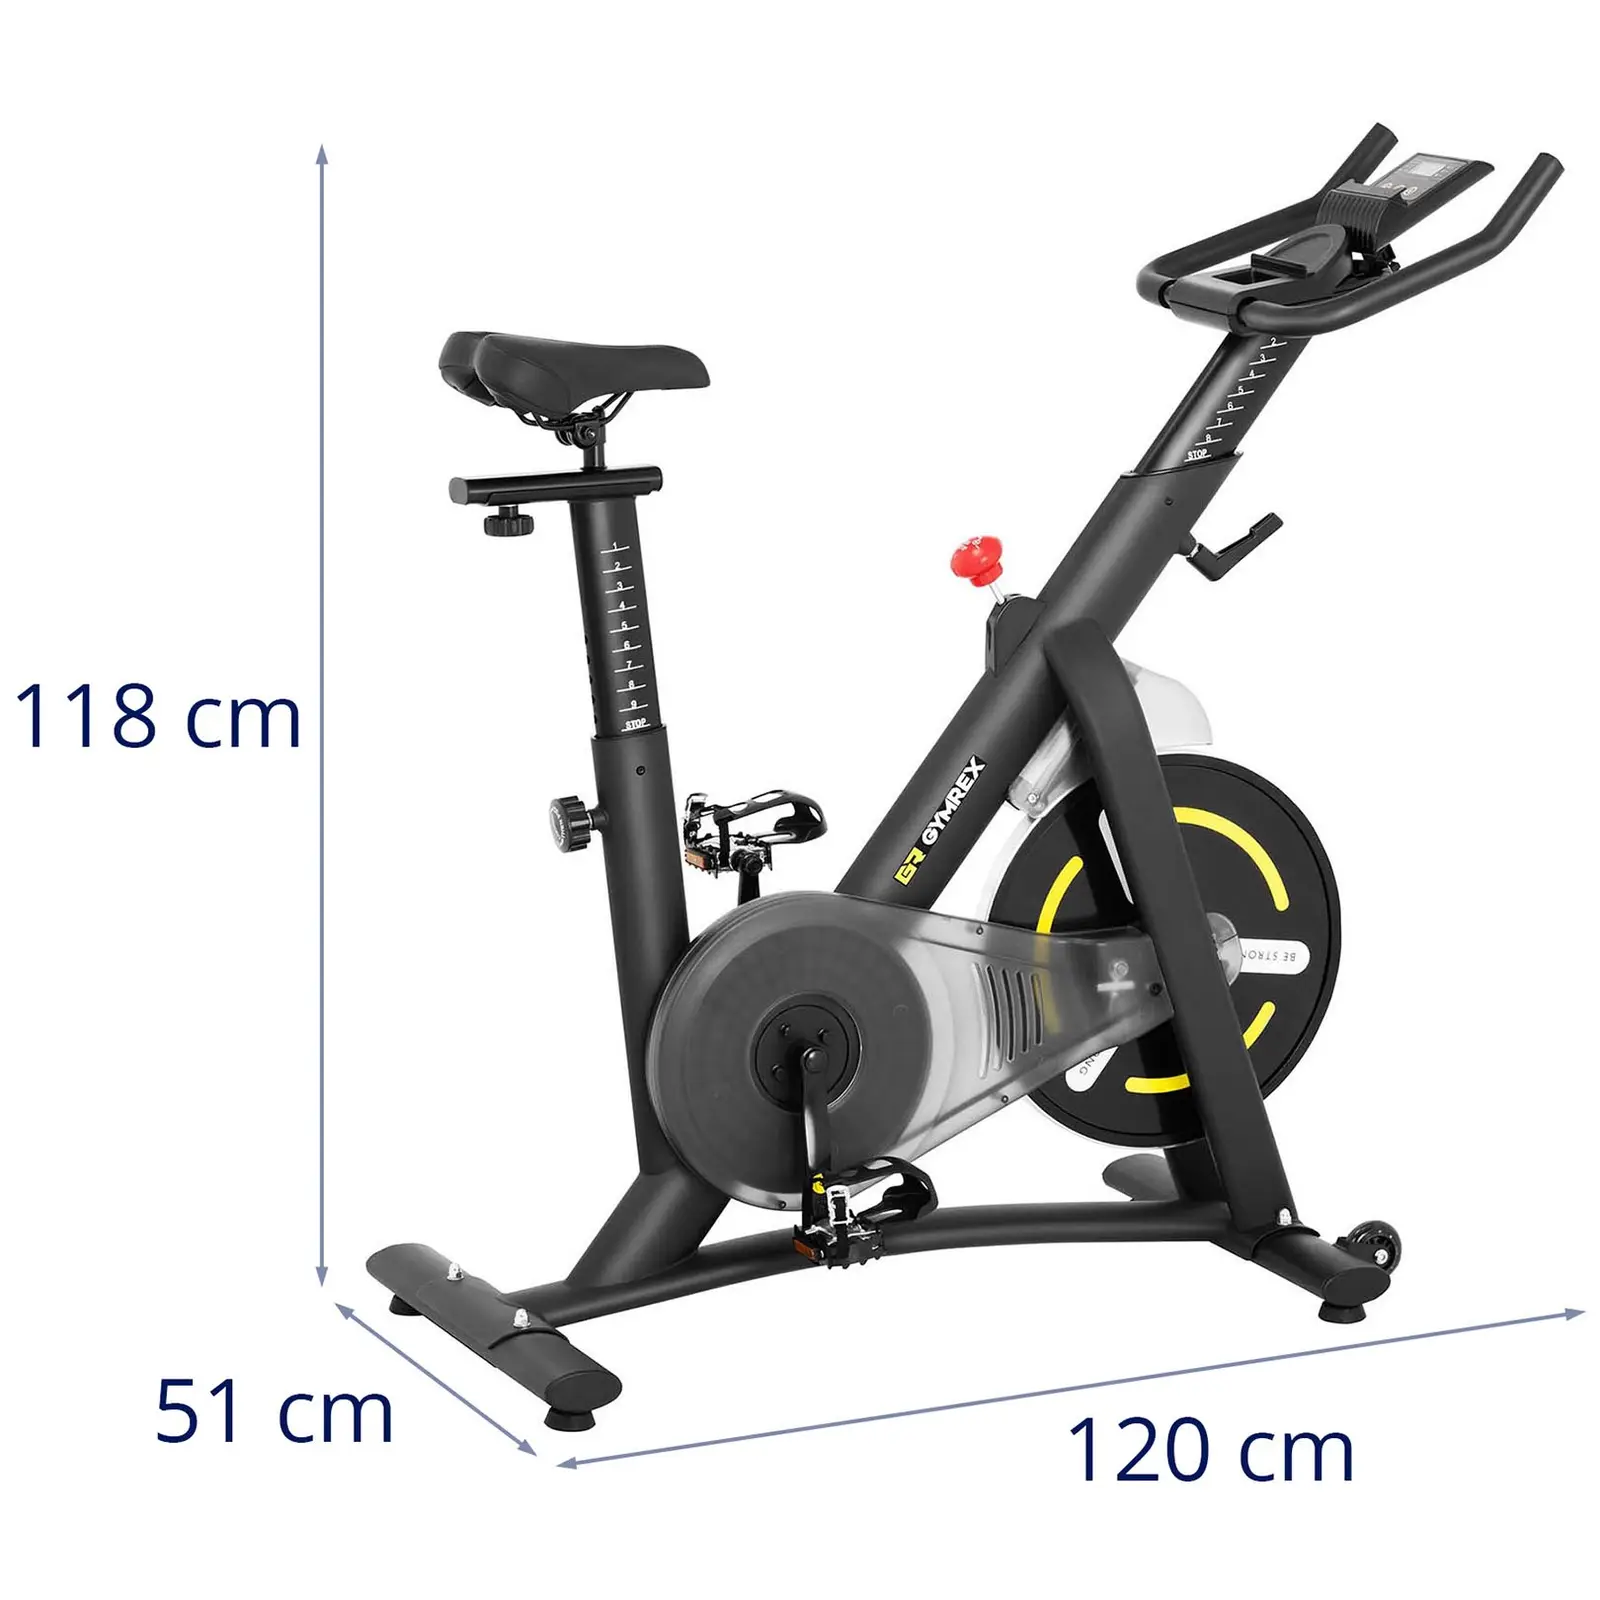 Bicicleta estática - masa de inercia 13 kg - LCD